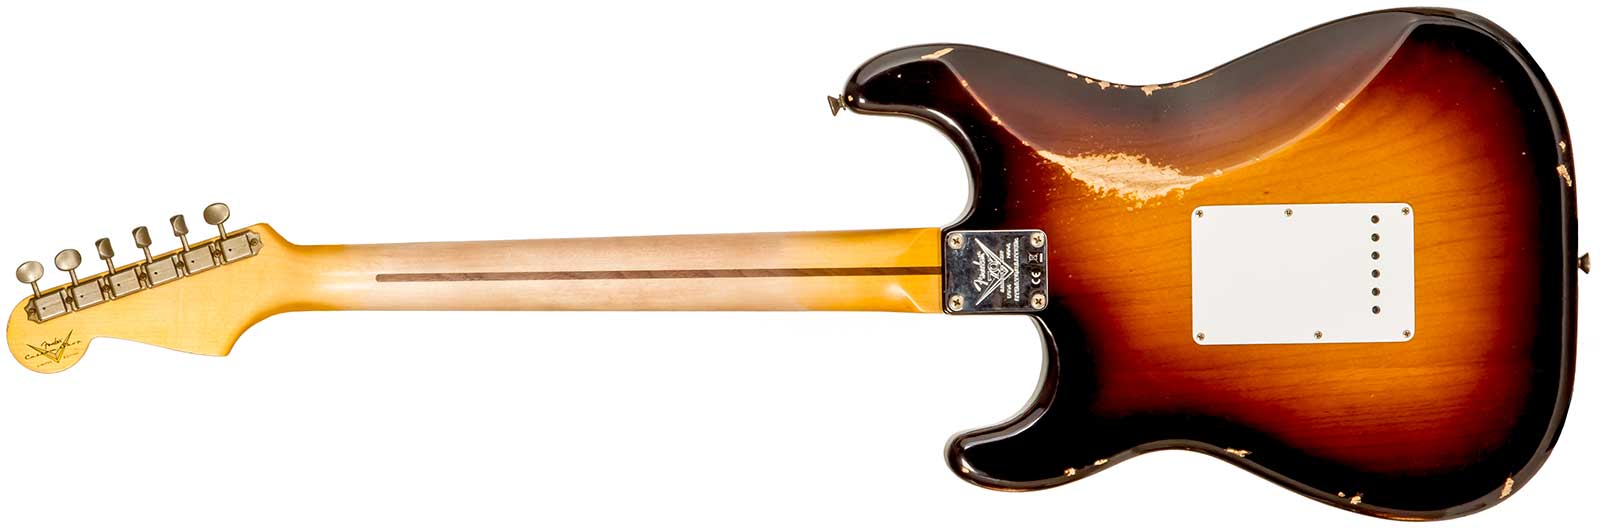 Fender Custom Shop Strat 1954 70th Anniv. 3s Trem Mn #xn4158 - Relic Wide-fade 2-color Sunburst - Guitare Électrique Forme Str - Variation 1